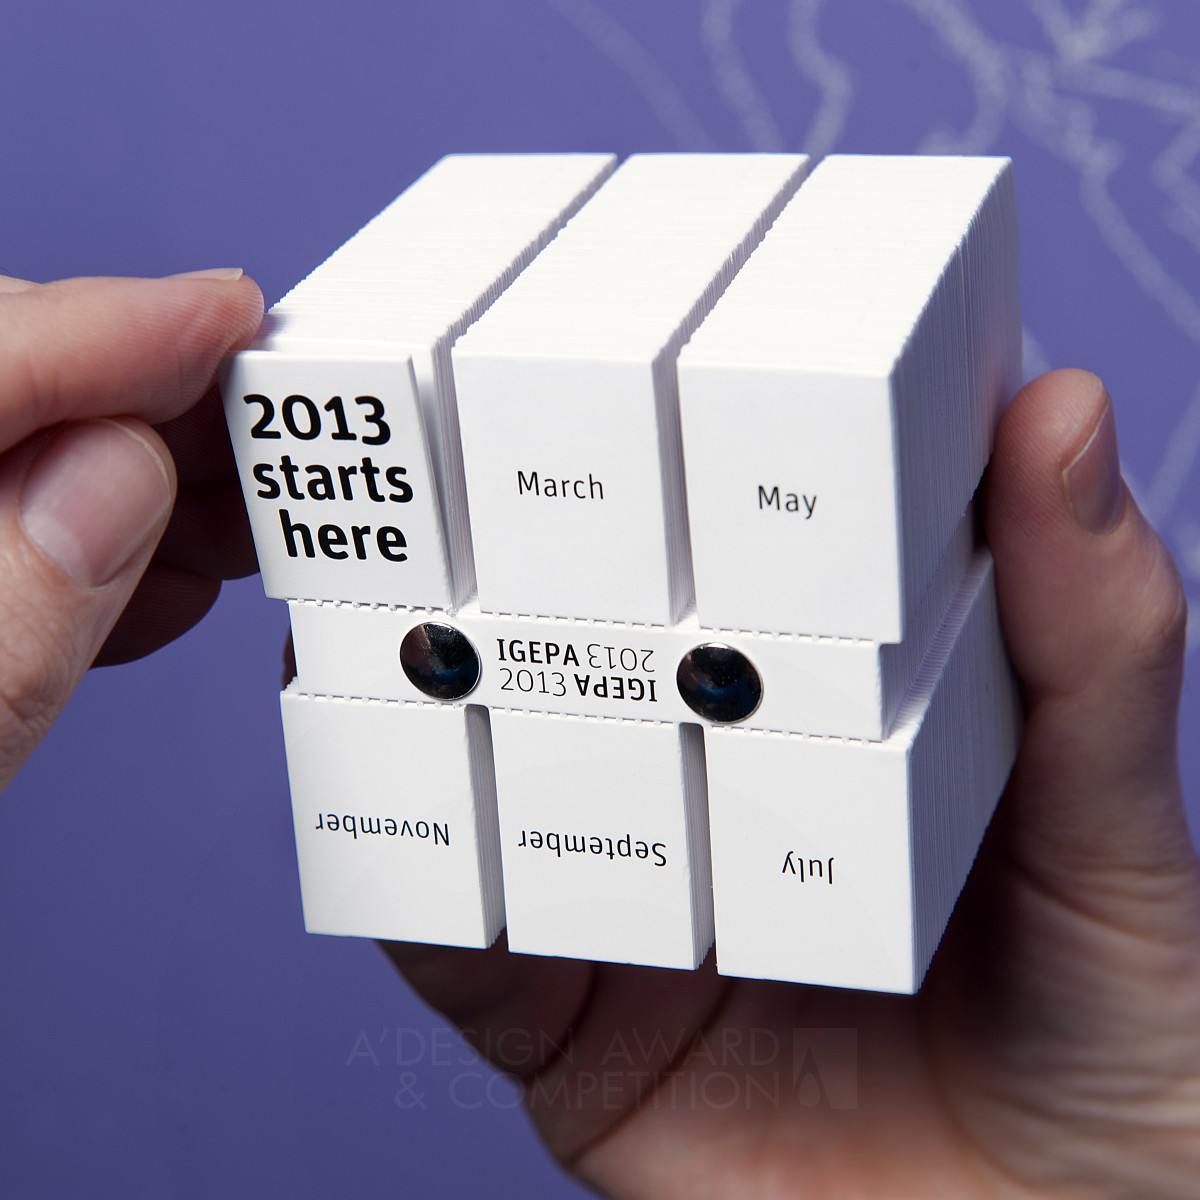 The Cube Calendar Calendar by Philip Stroomberg